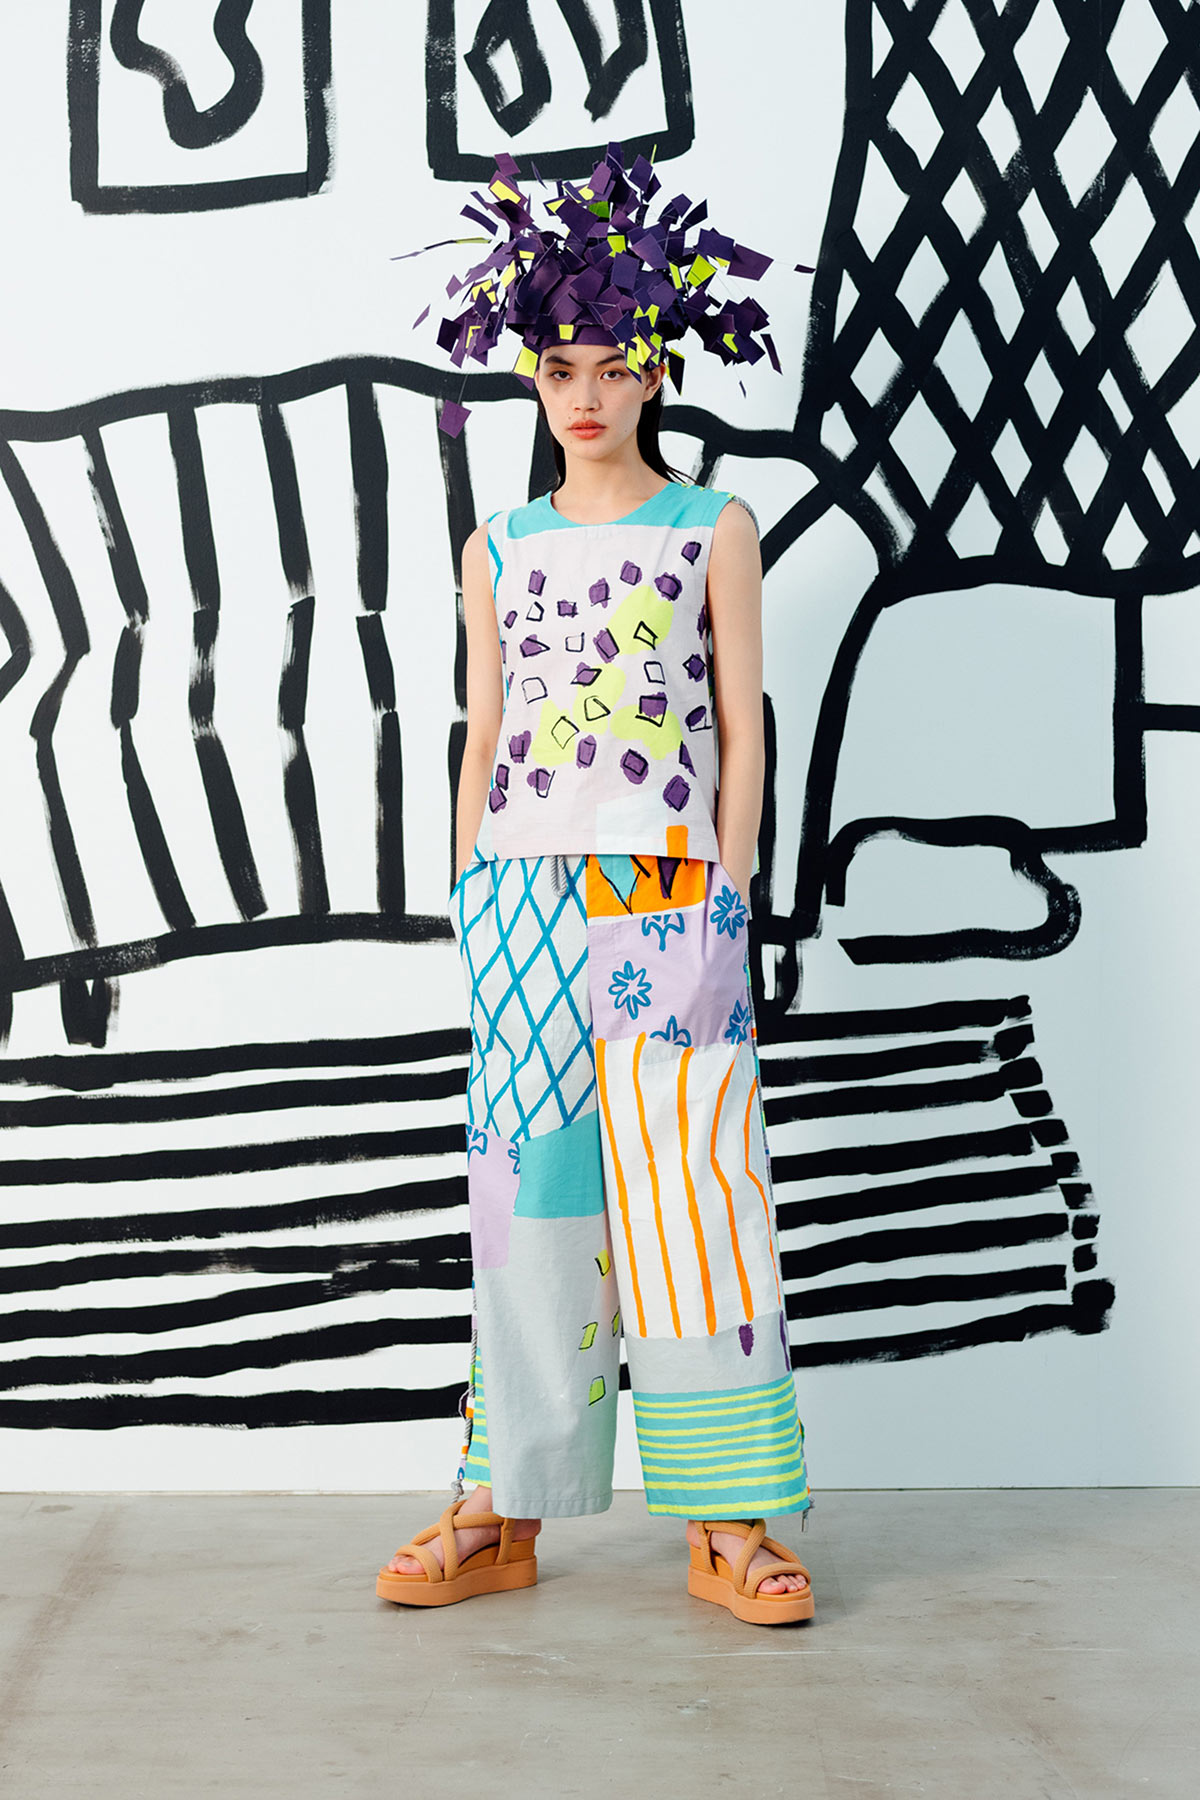 Issey Miyake Spring/Summer 2021 | The Fashionography